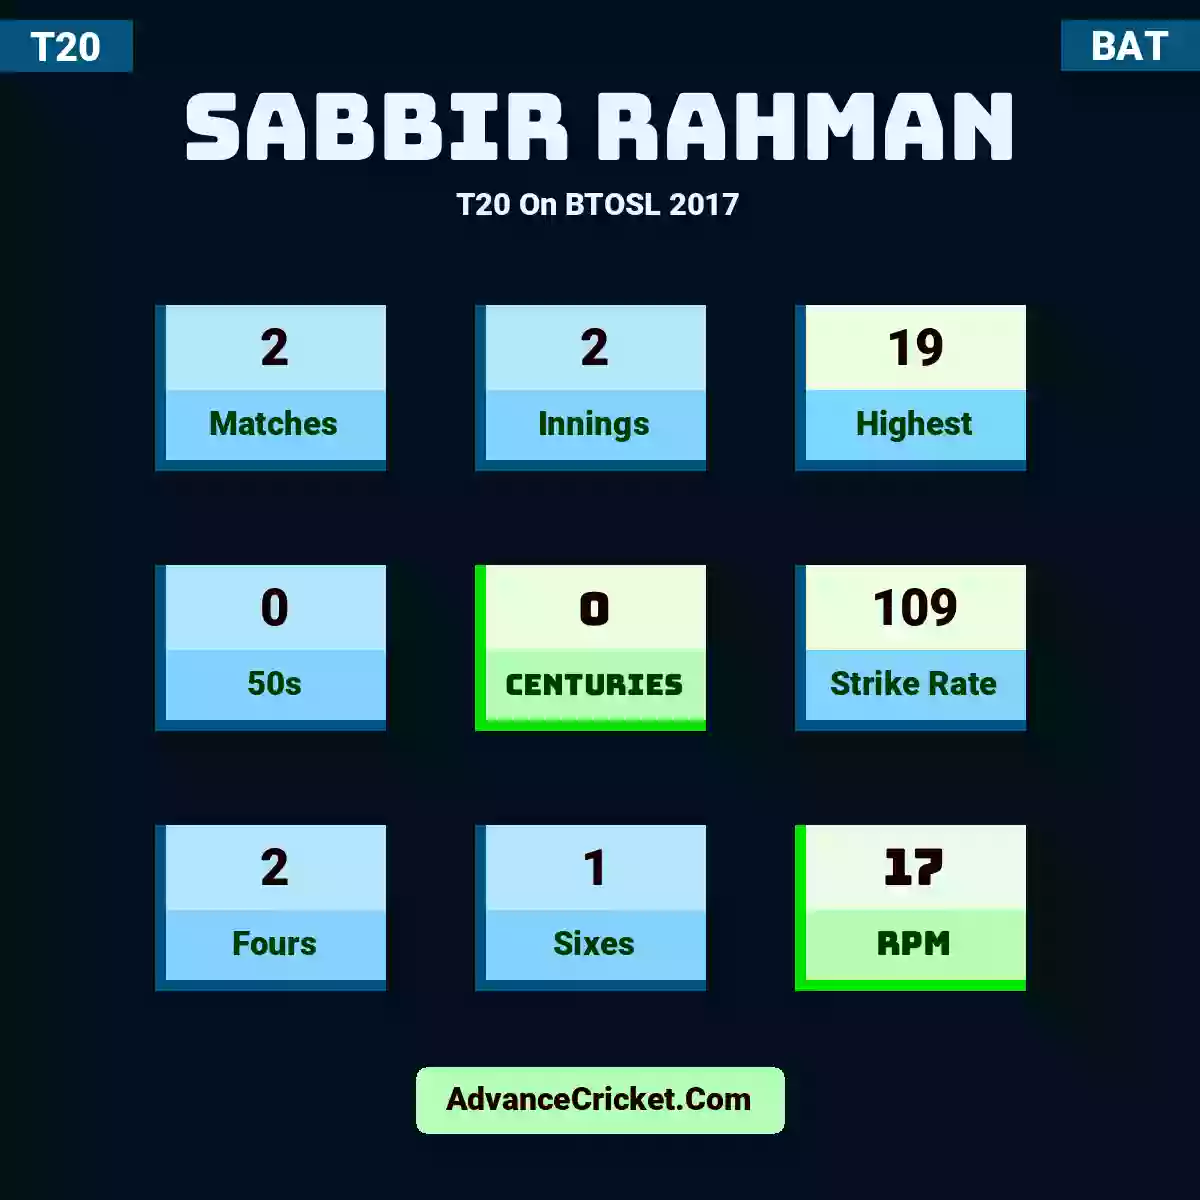 Sabbir Rahman T20  On BTOSL 2017, Sabbir Rahman played 2 matches, scored 19 runs as highest, 0 half-centuries, and 0 centuries, with a strike rate of 109. S.Rahman hit 2 fours and 1 sixes, with an RPM of 17.